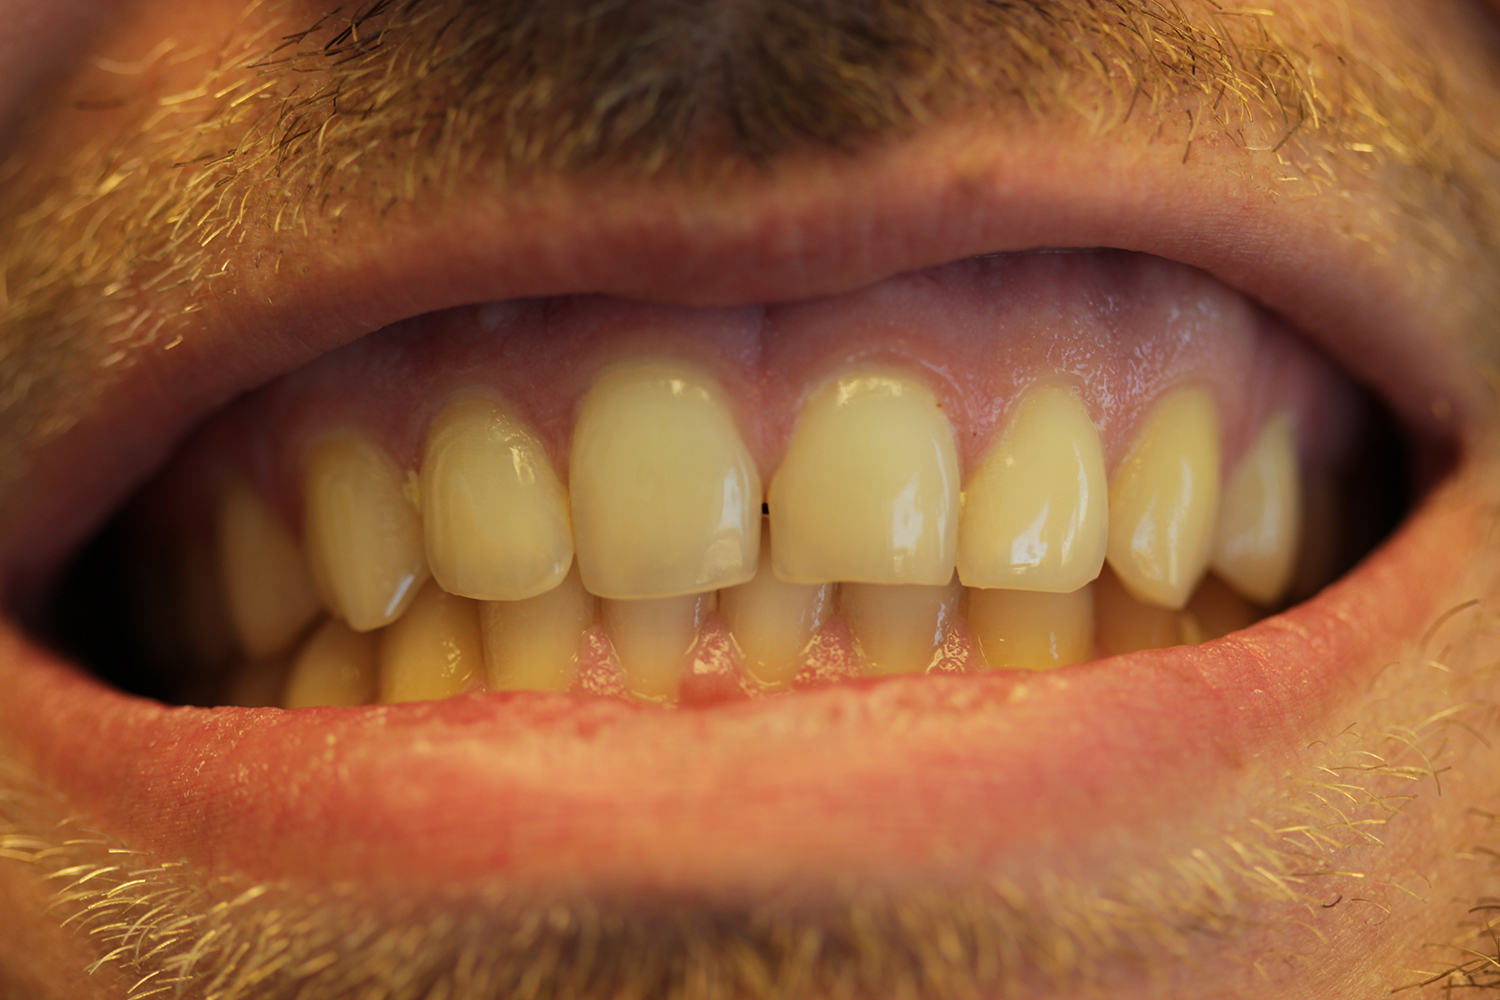 unwhitened teeth